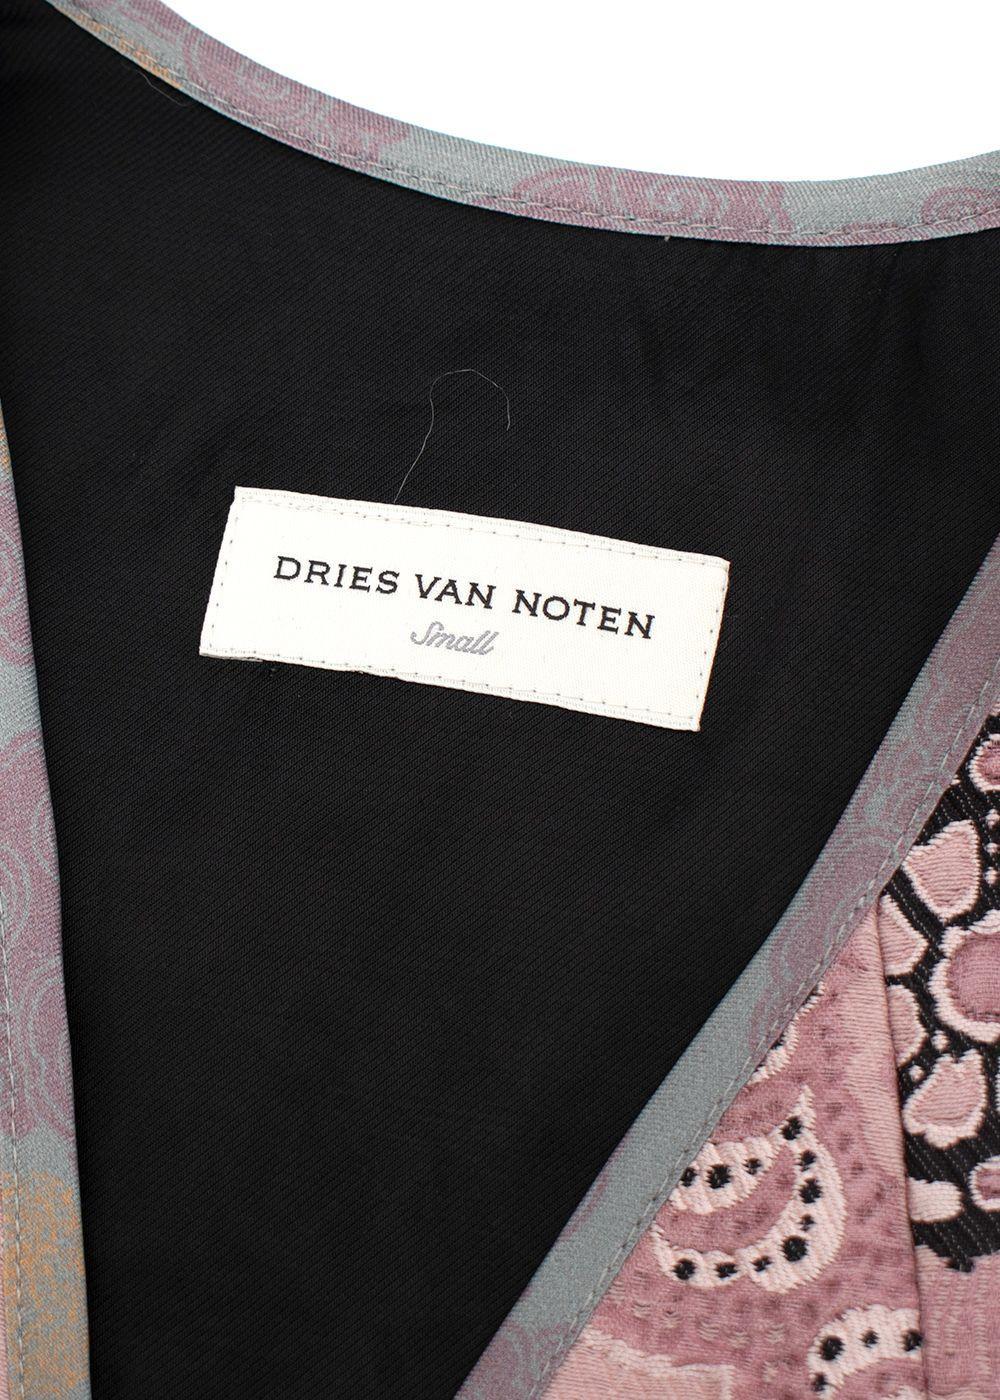 Women's Dries Van Noten Pink Jacquard Gilet with Shearling Hem - US 6